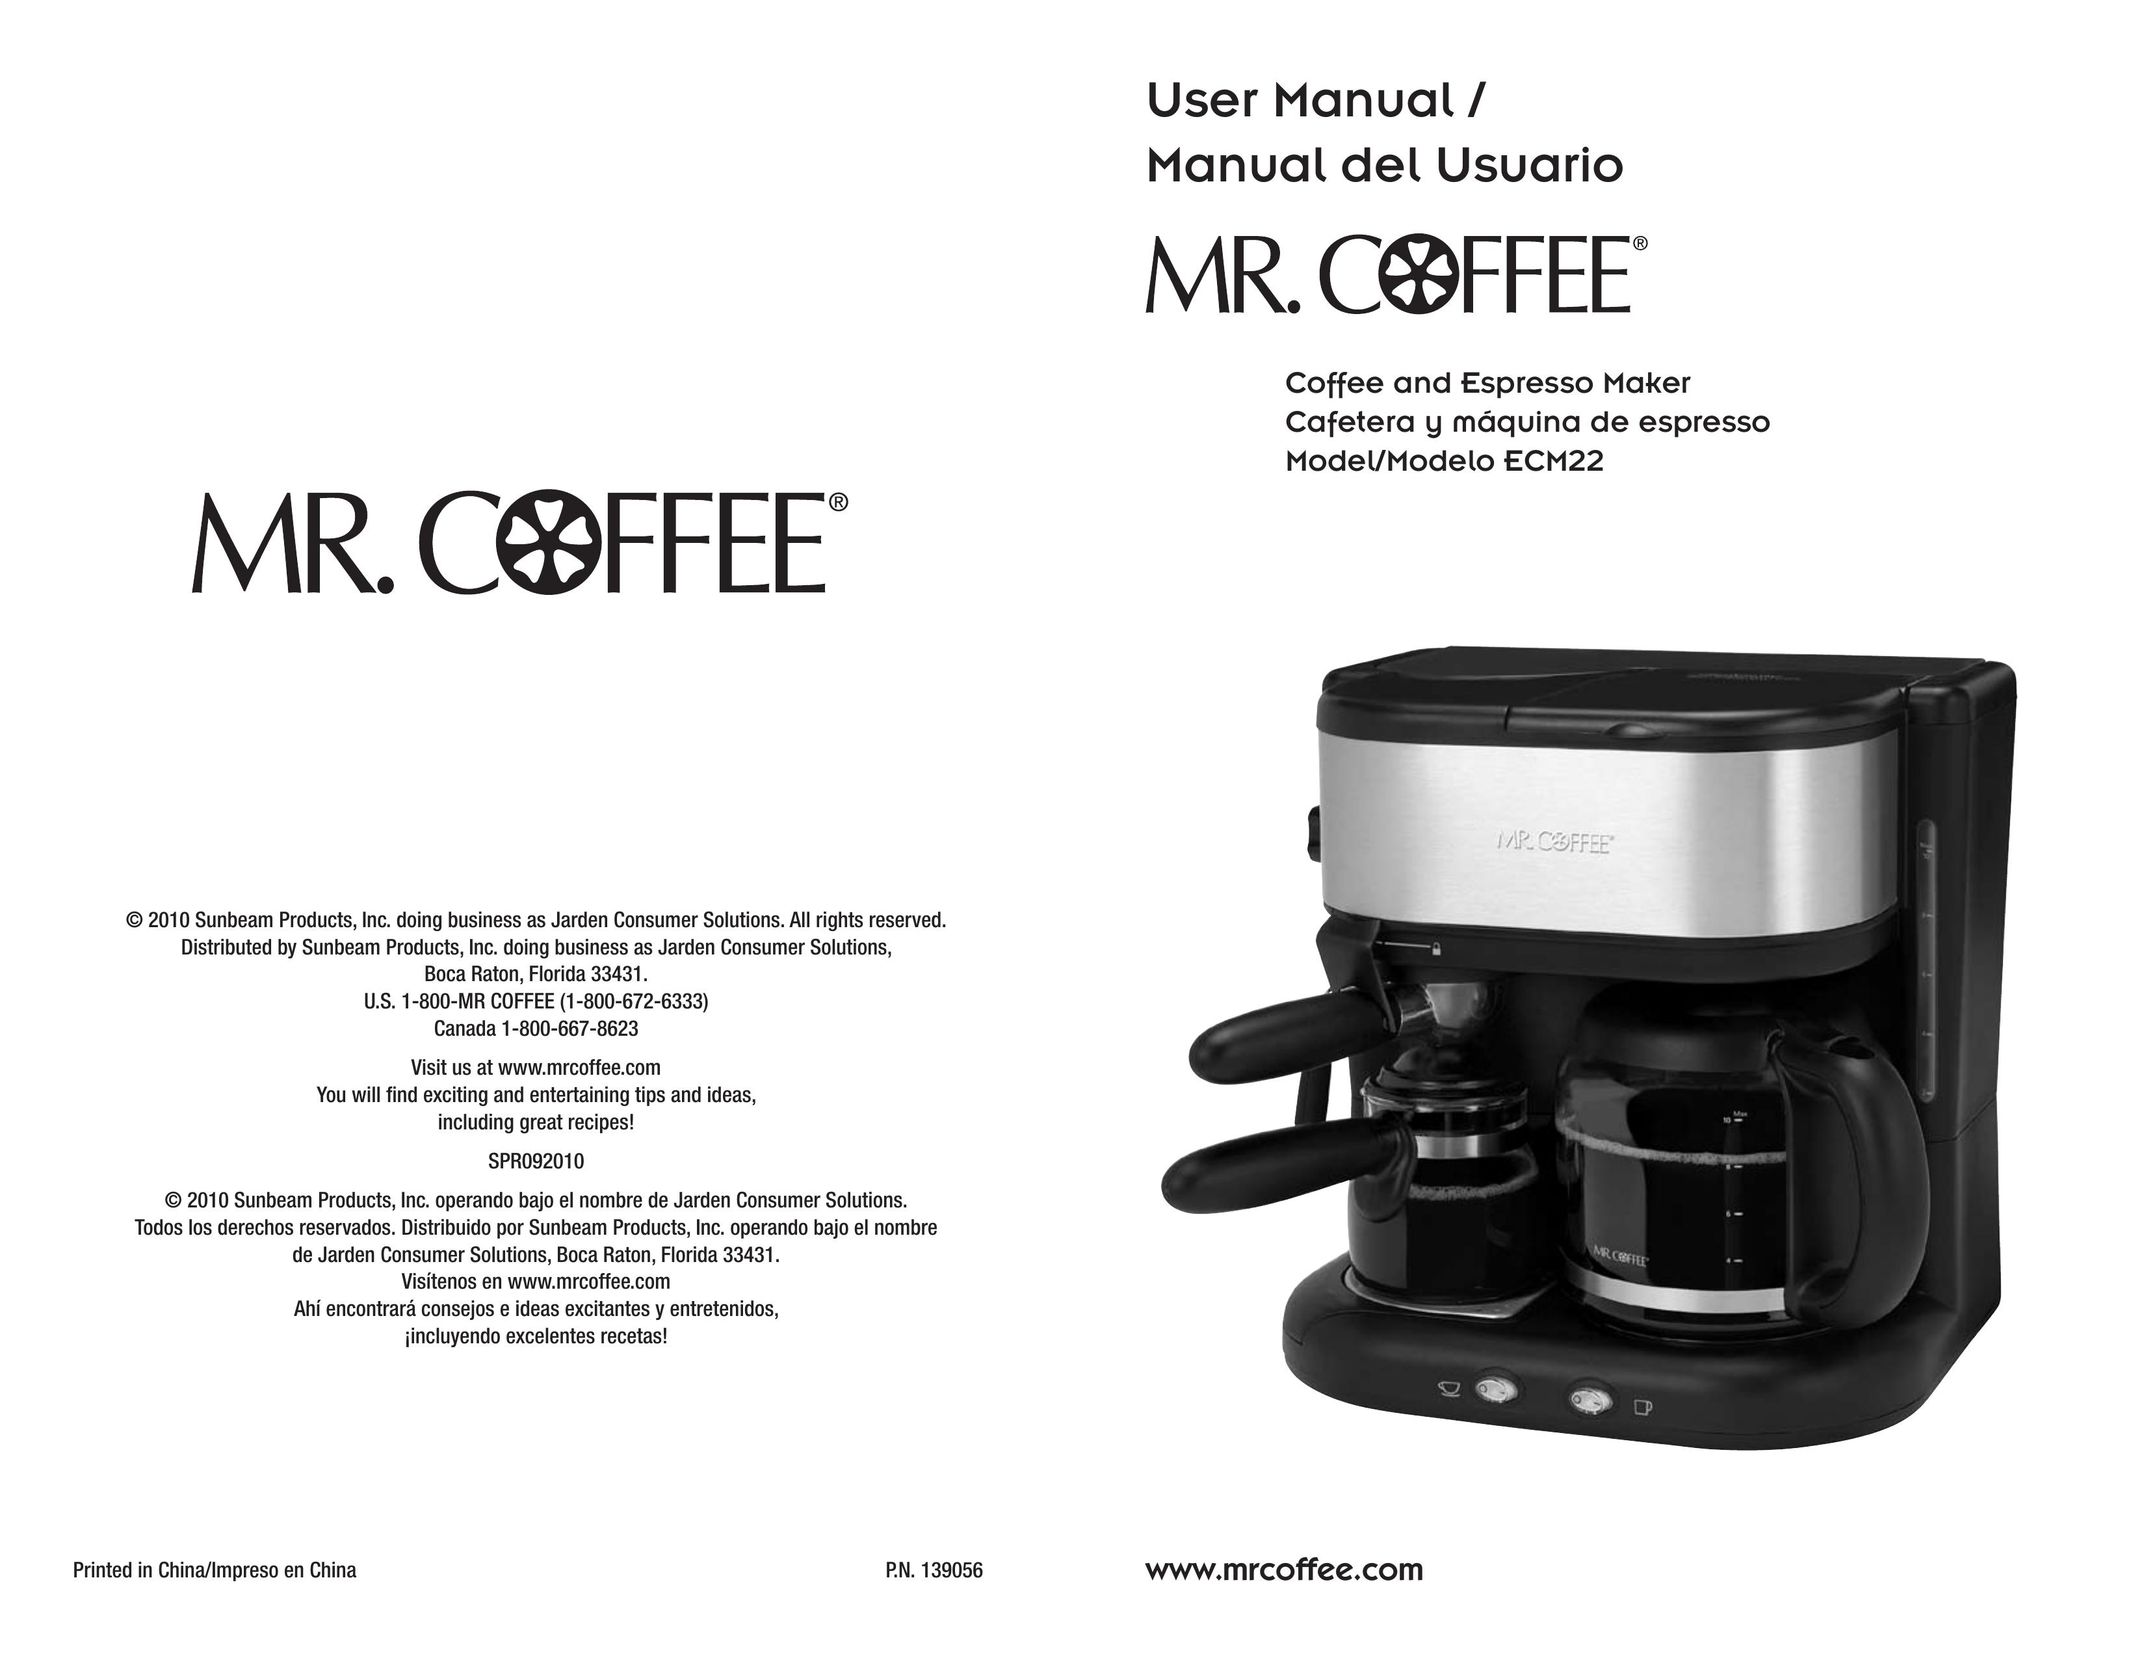 Mr. Coffee ECM22 Coffeemaker User Manual